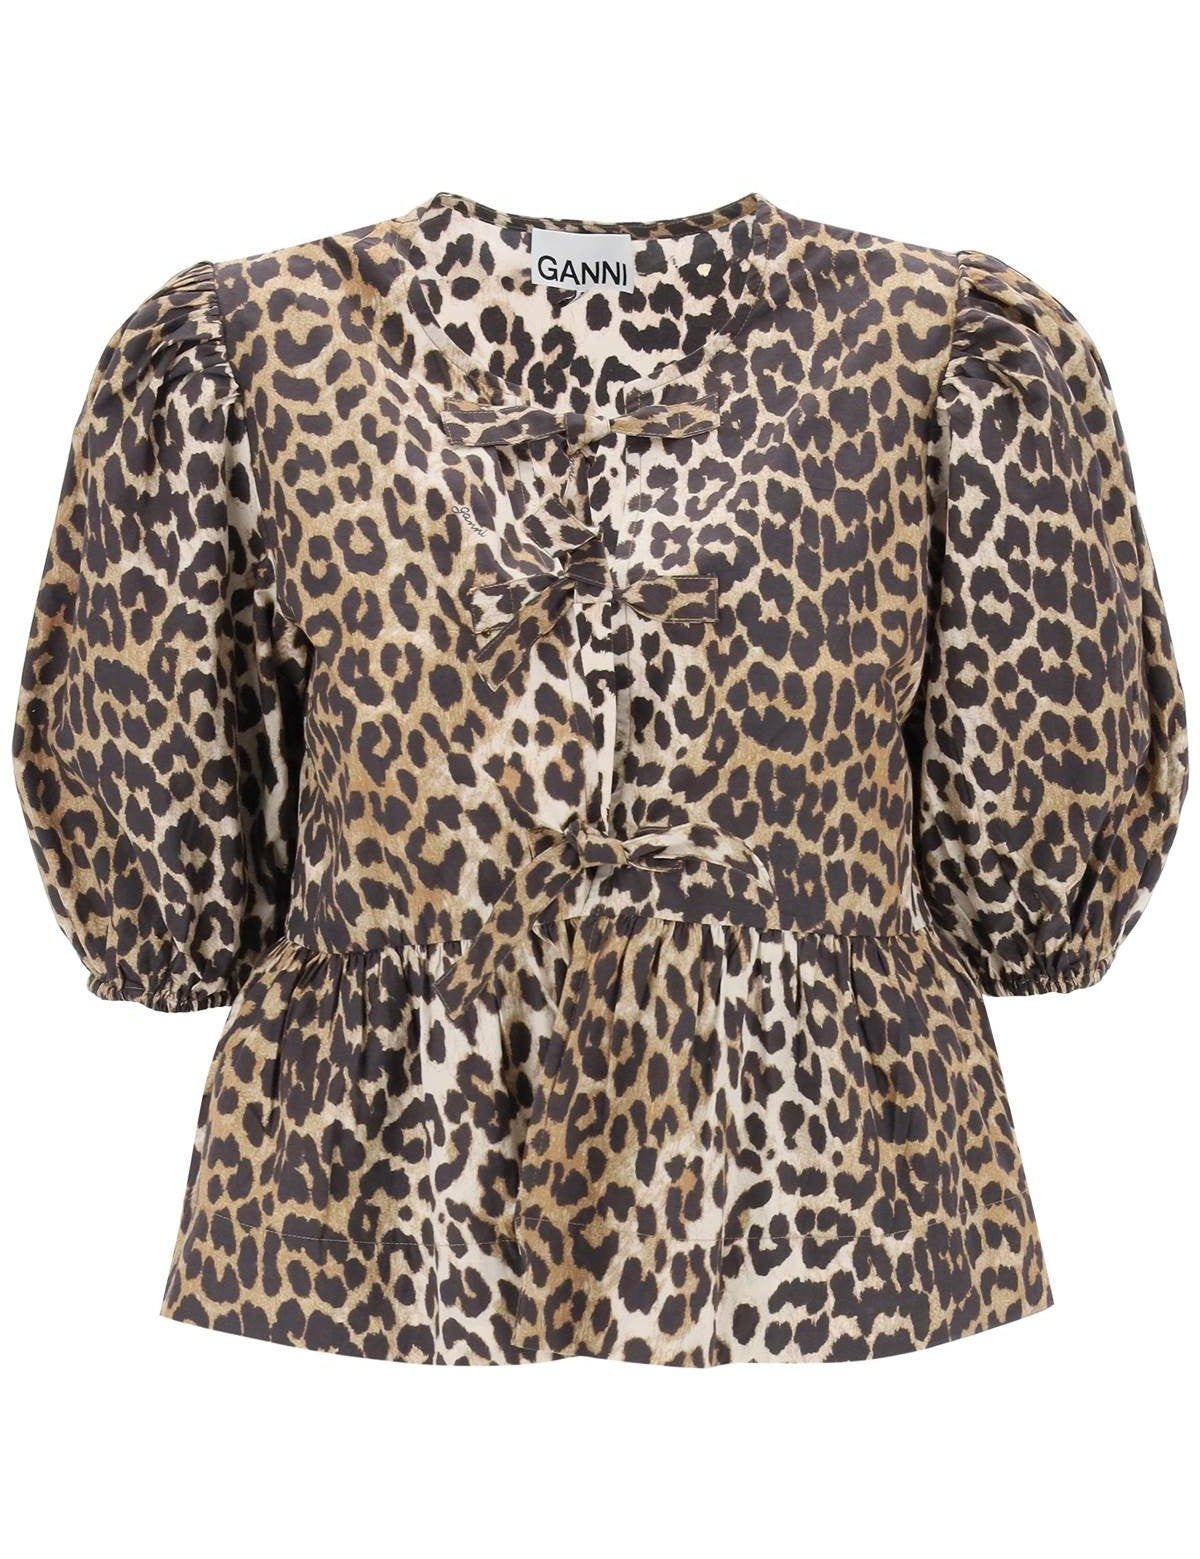 ganni-leopard-print-peplum-blouse.jpg